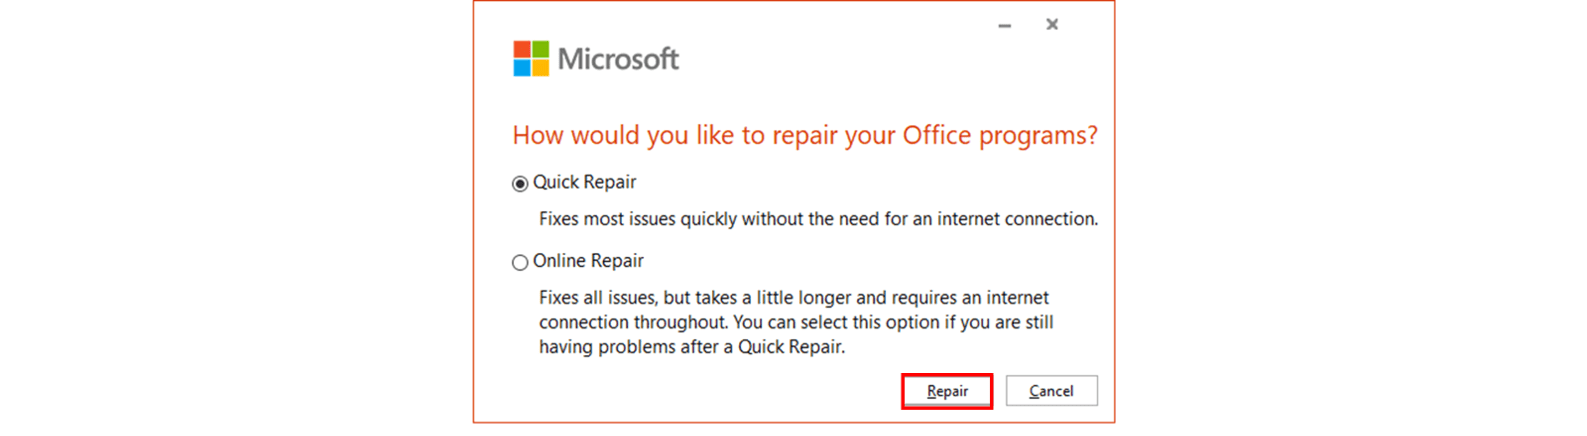 Microsoft Office repair pop-up